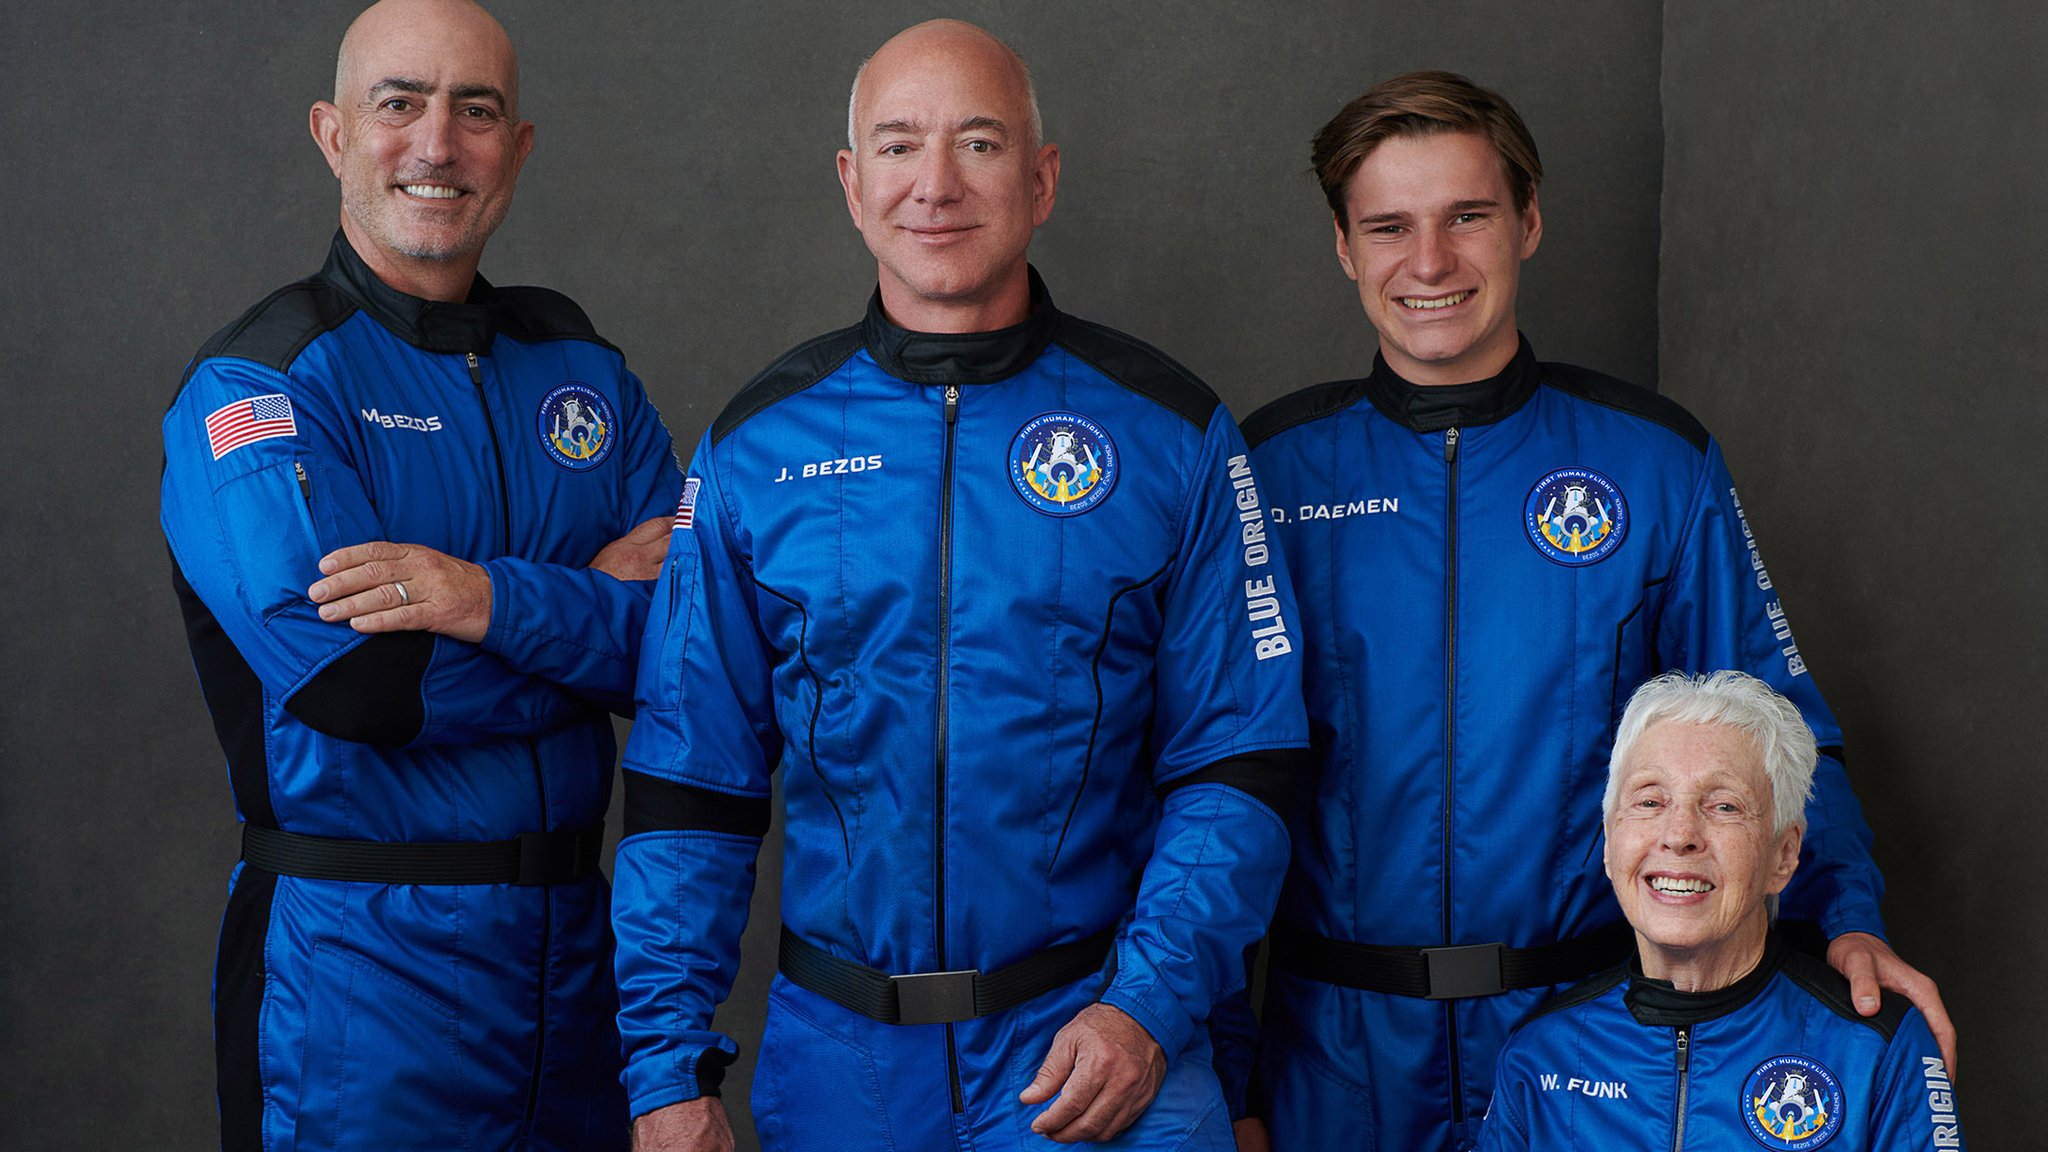 Jeff Bezos to blast into space aboard New Shepard rocket ship